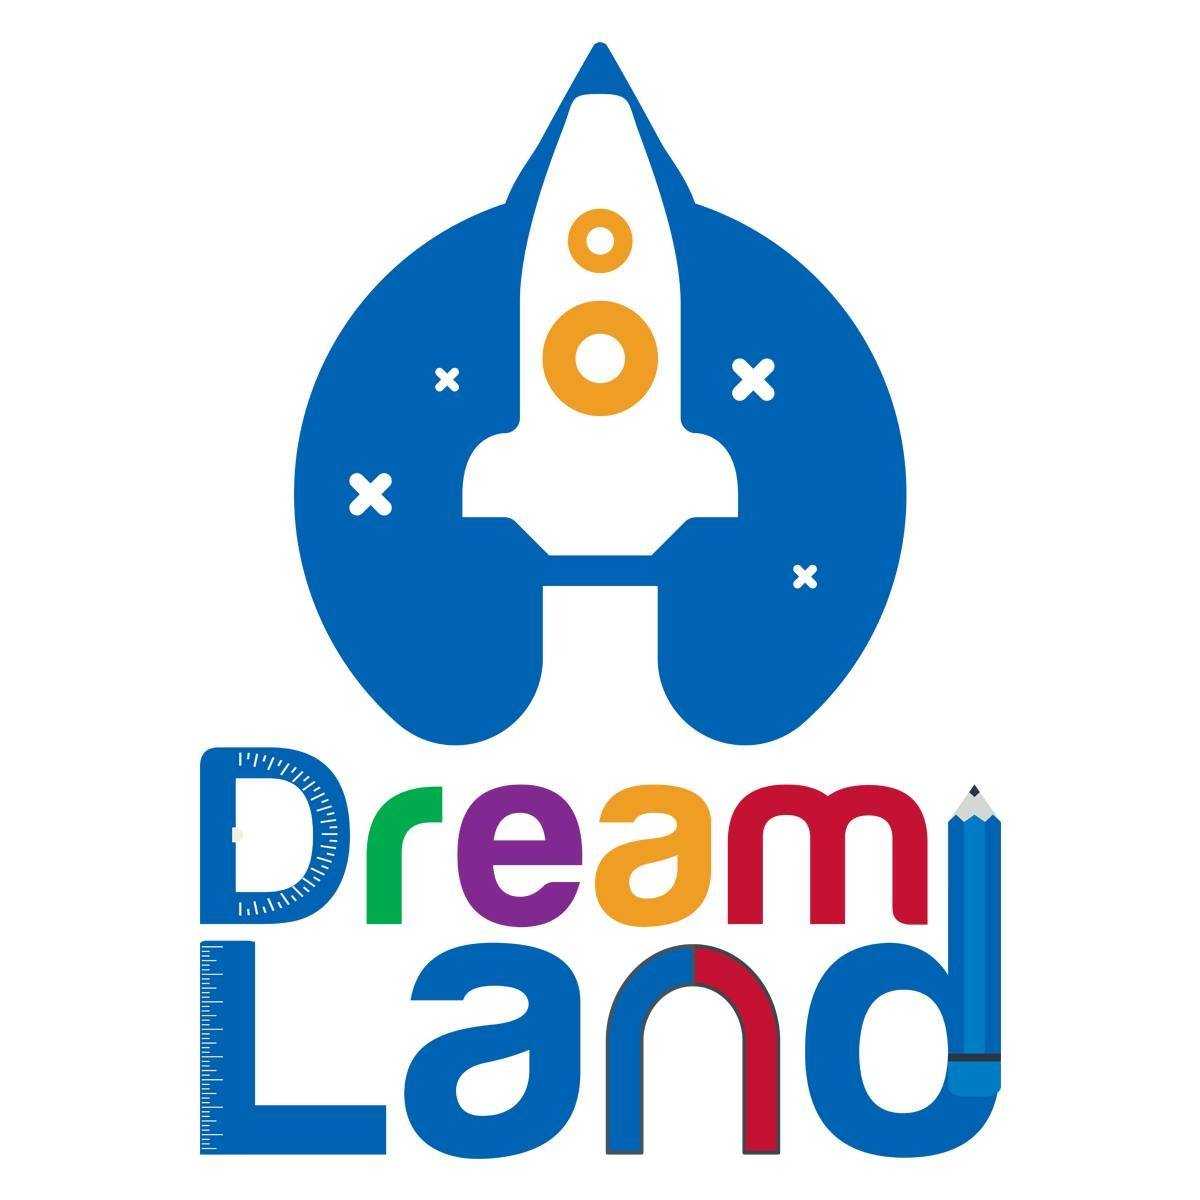 Dream Land Nursery